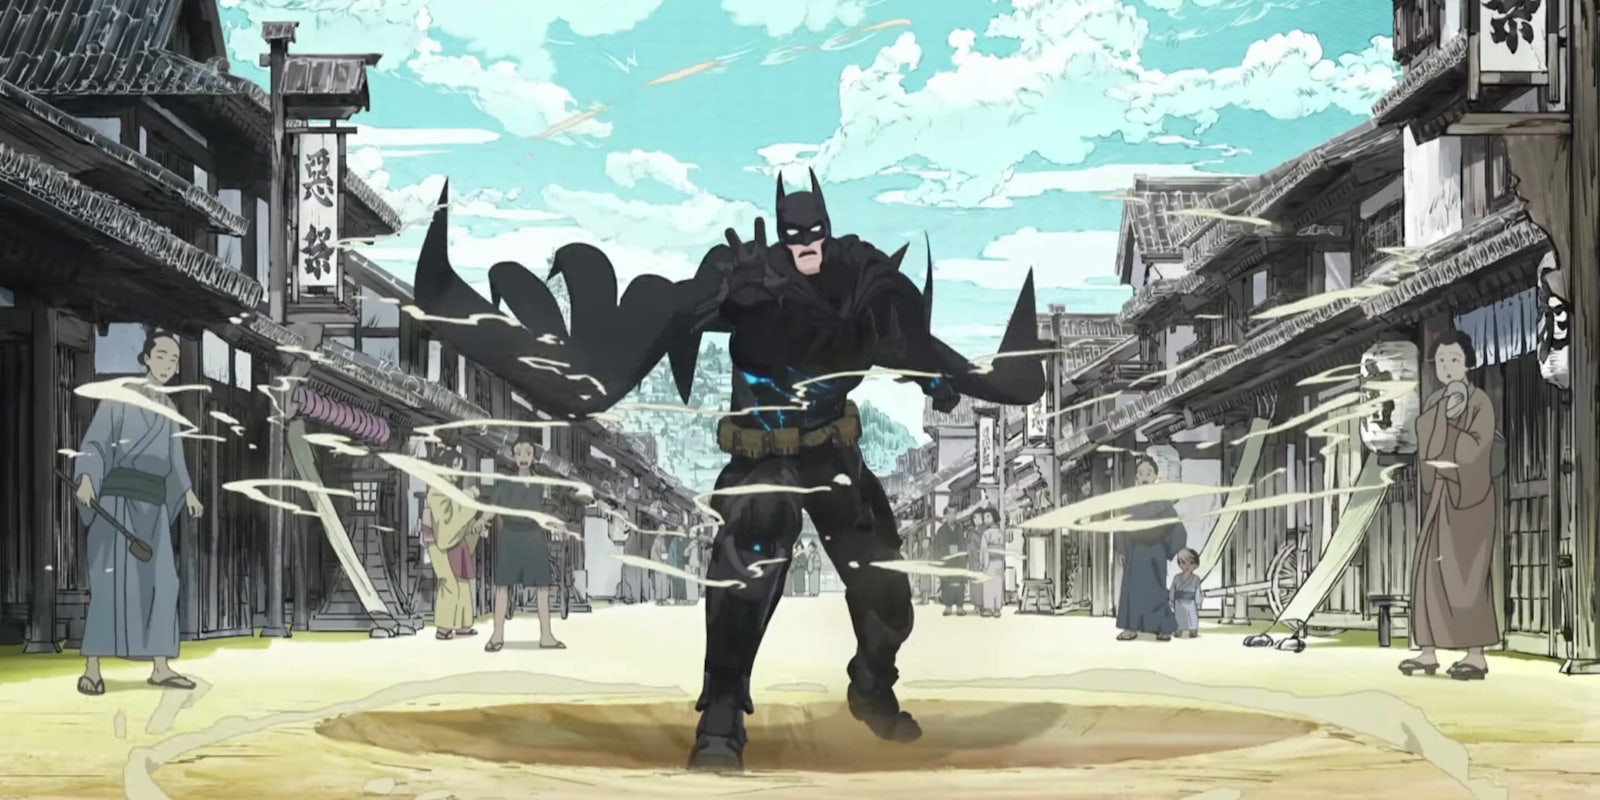 The trailer for 'Batman Ninja' looks incredible.